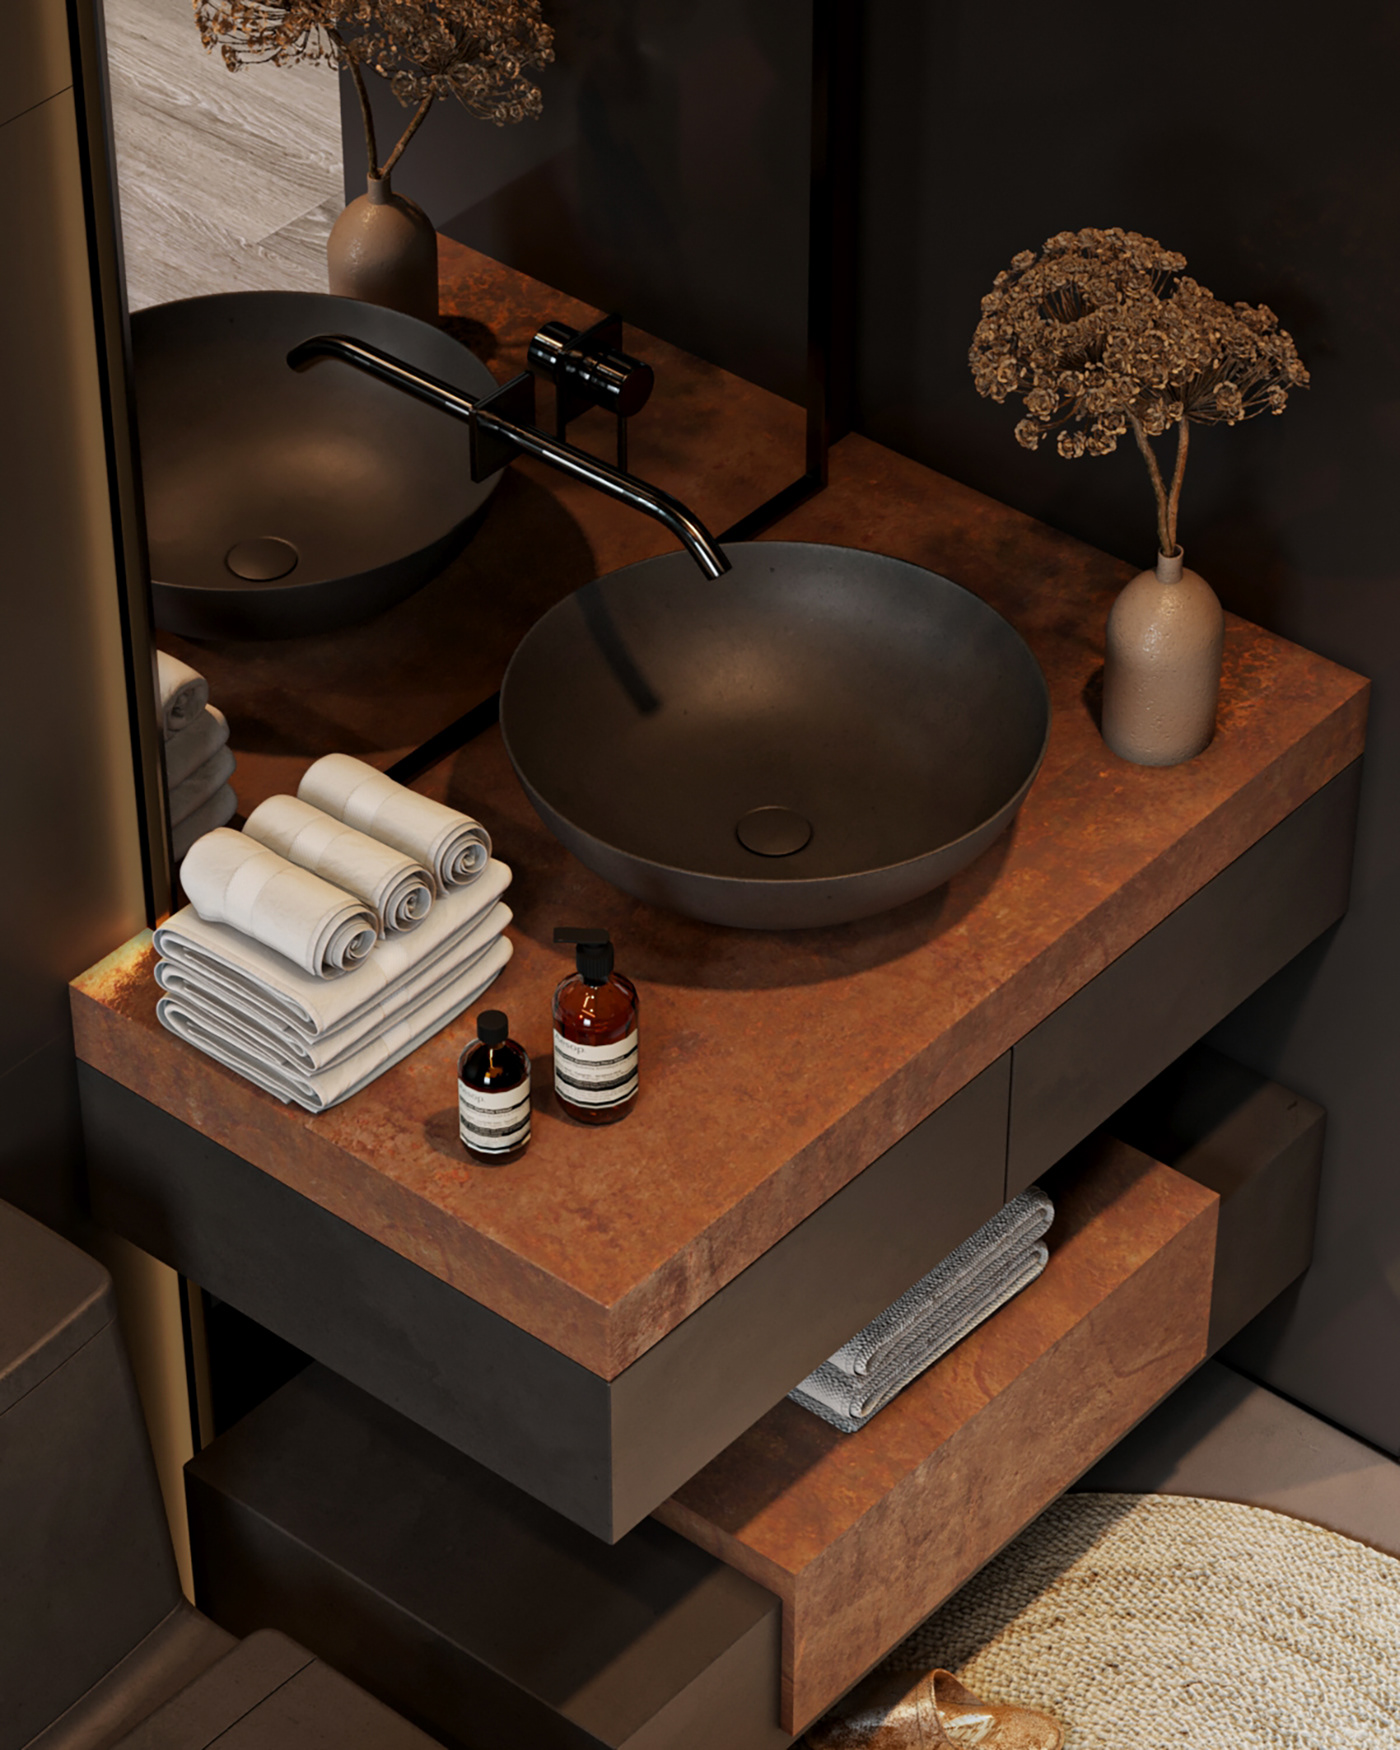 3dmax architecture bedroom design Interior interior design  minimal minimalist modeling modern